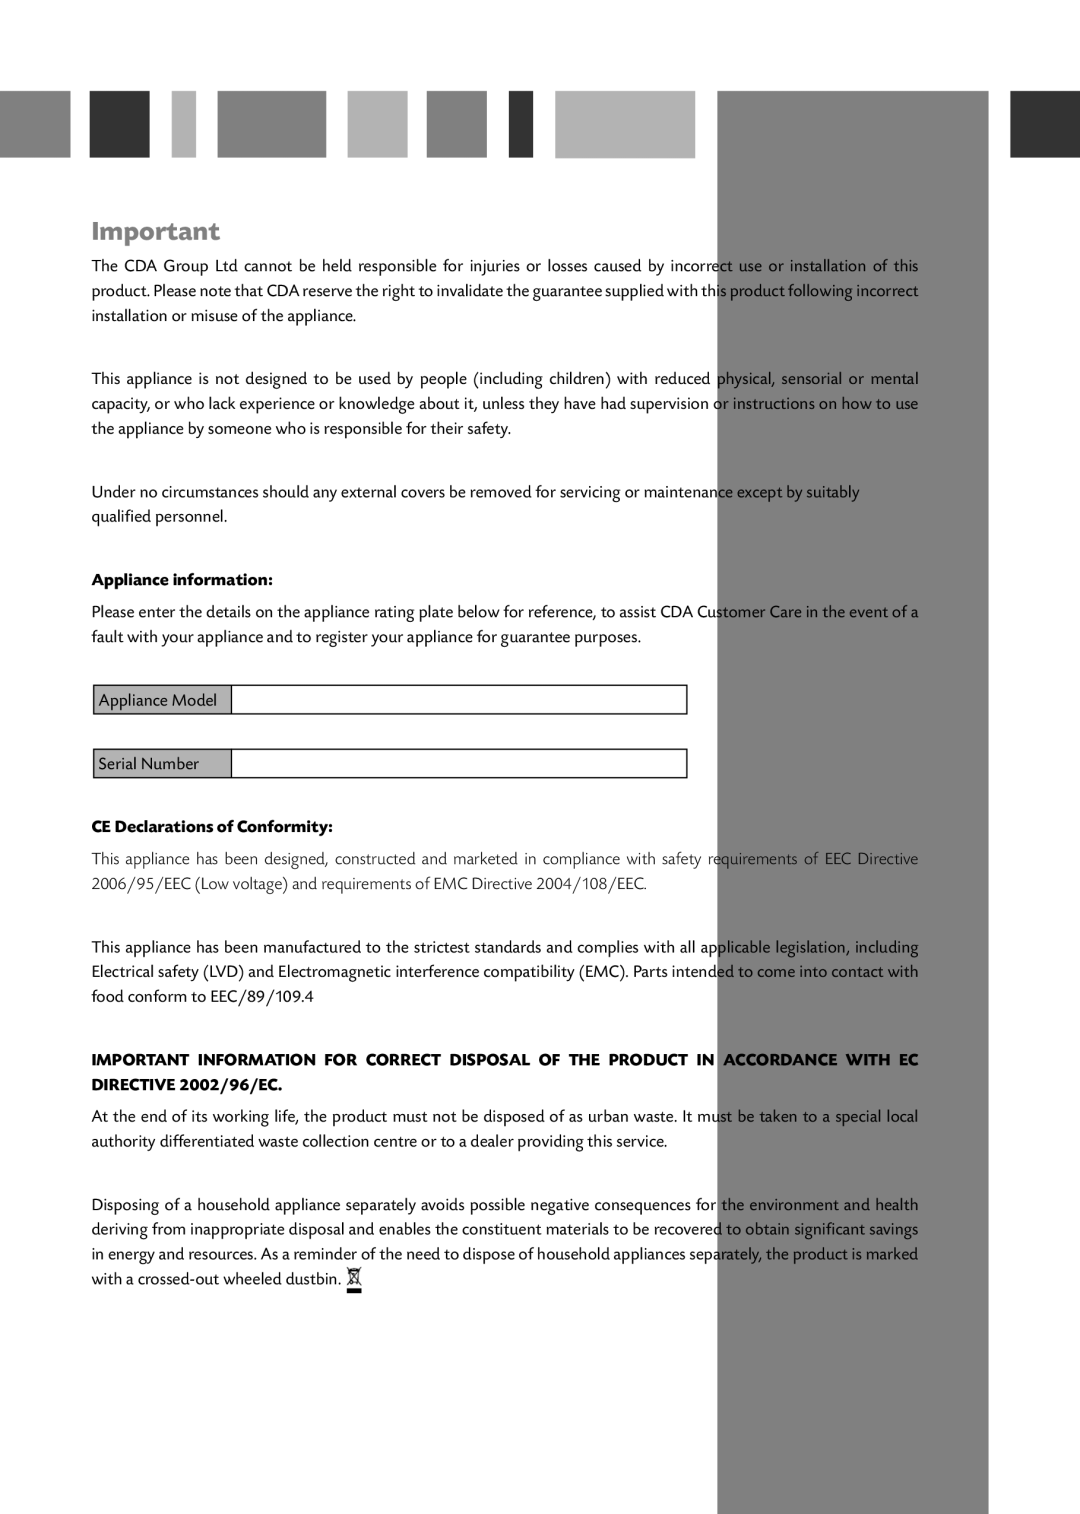 CDA FF180 manual Appliance information, CE Declarations of Conformity 